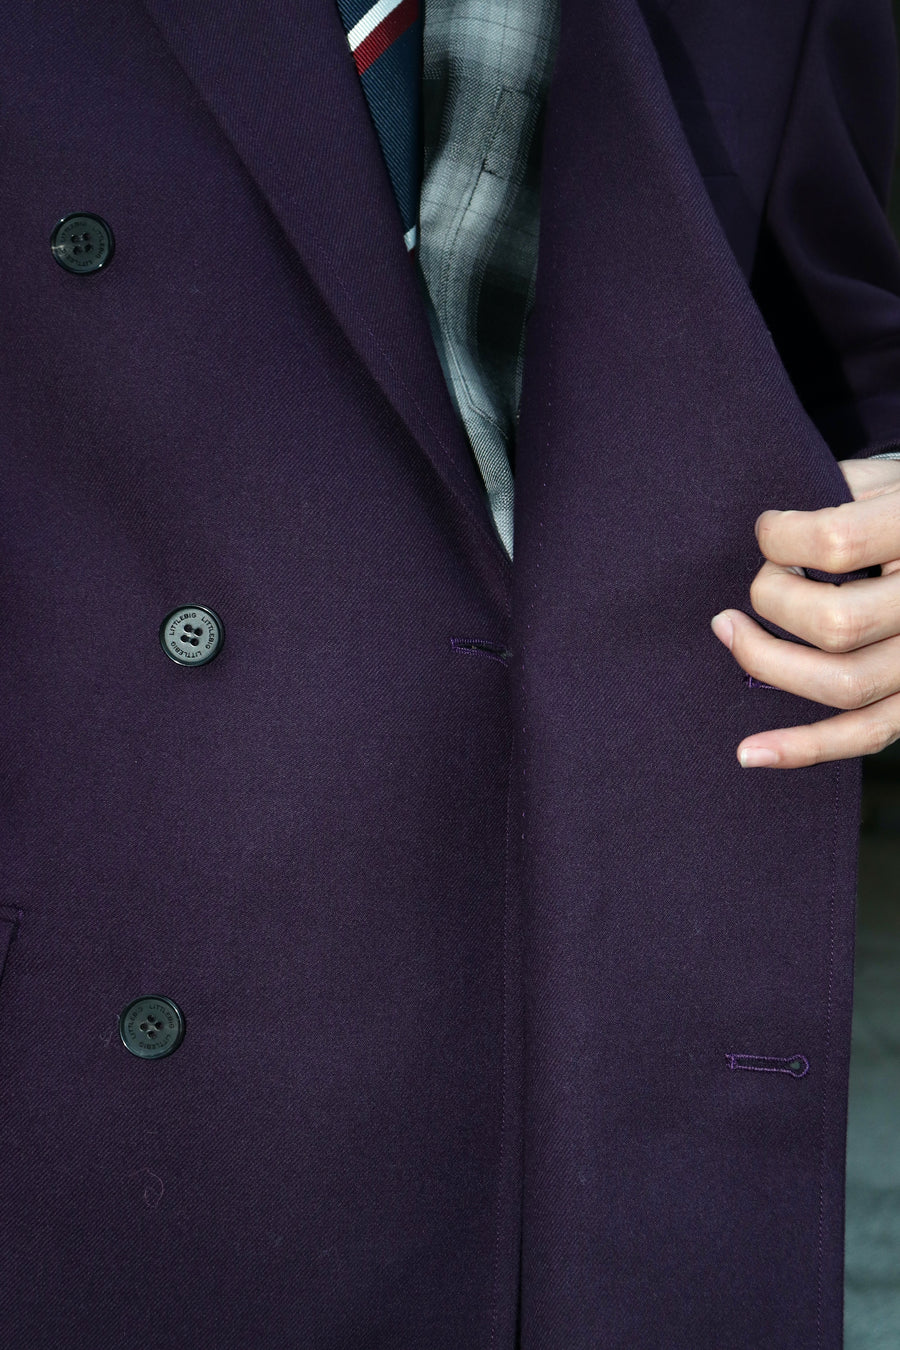 LITTLEBIG  Cut Jacket(Purple)